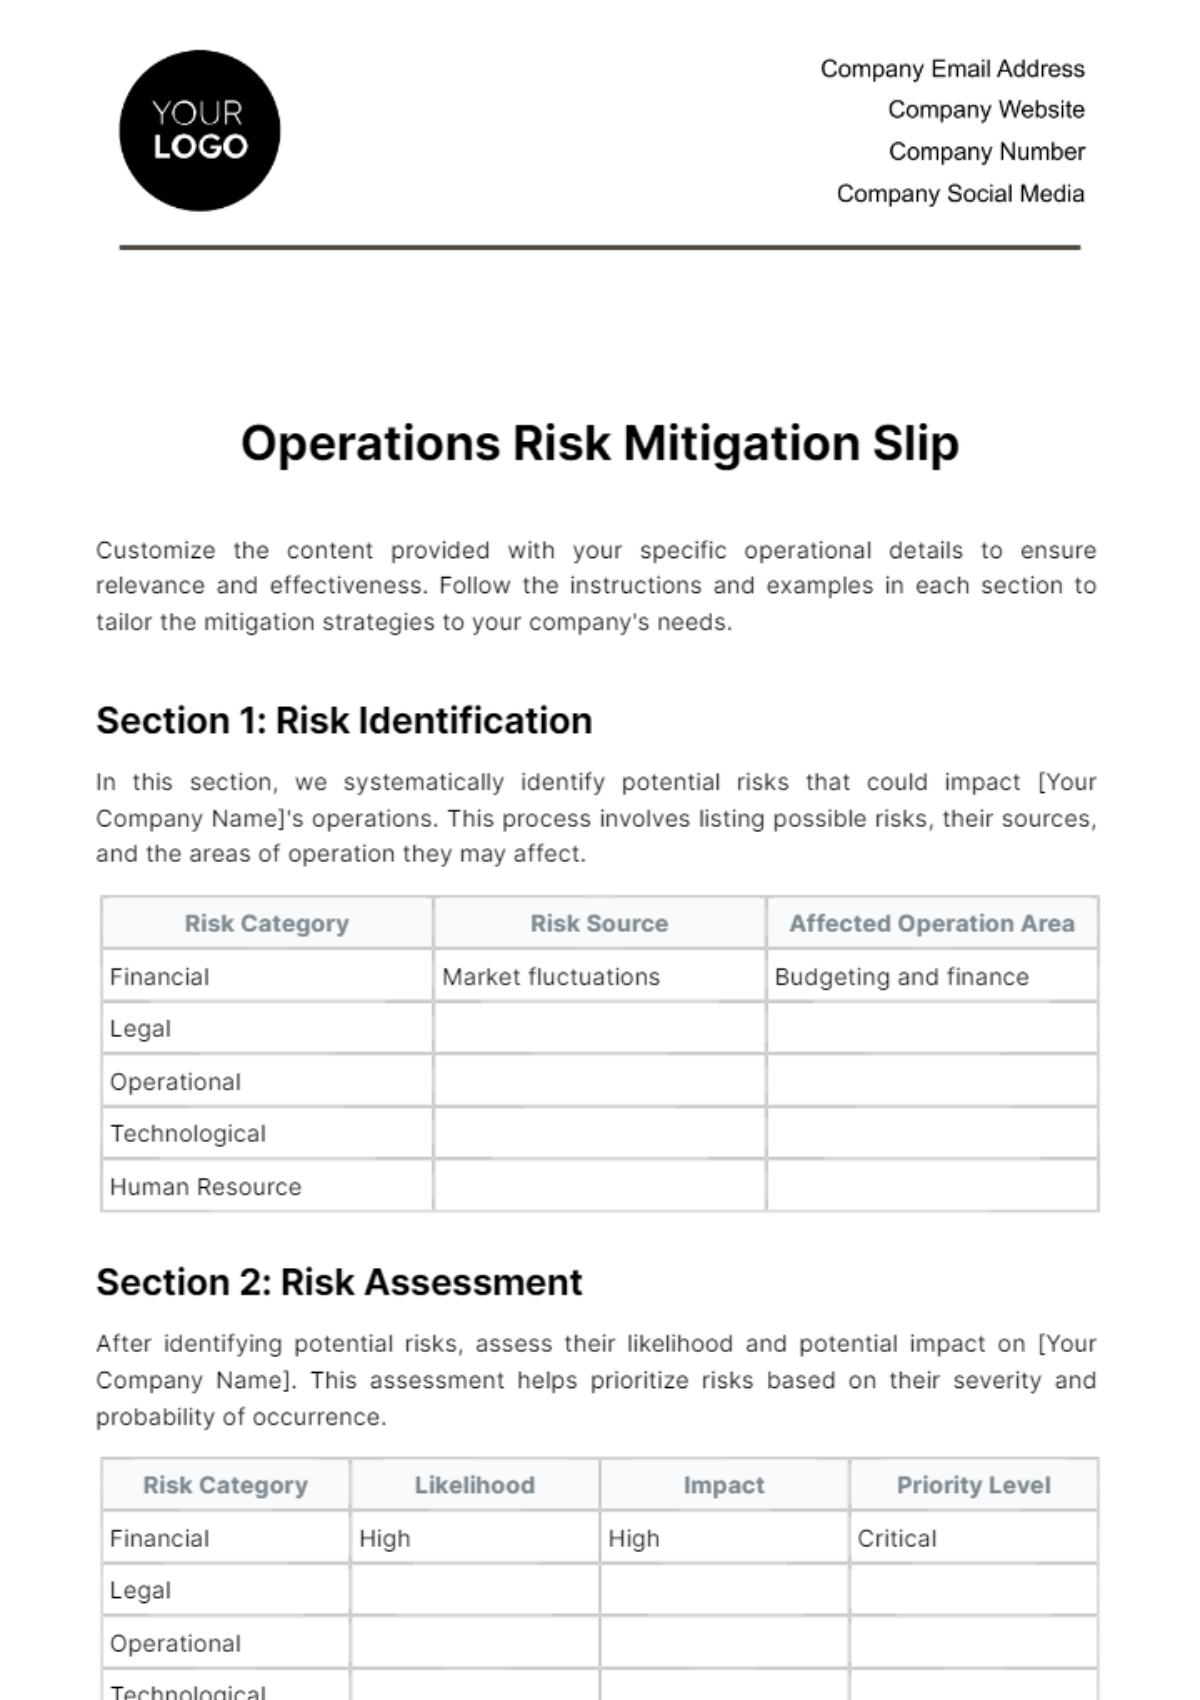 Operations Risk Mitigation Slip Template